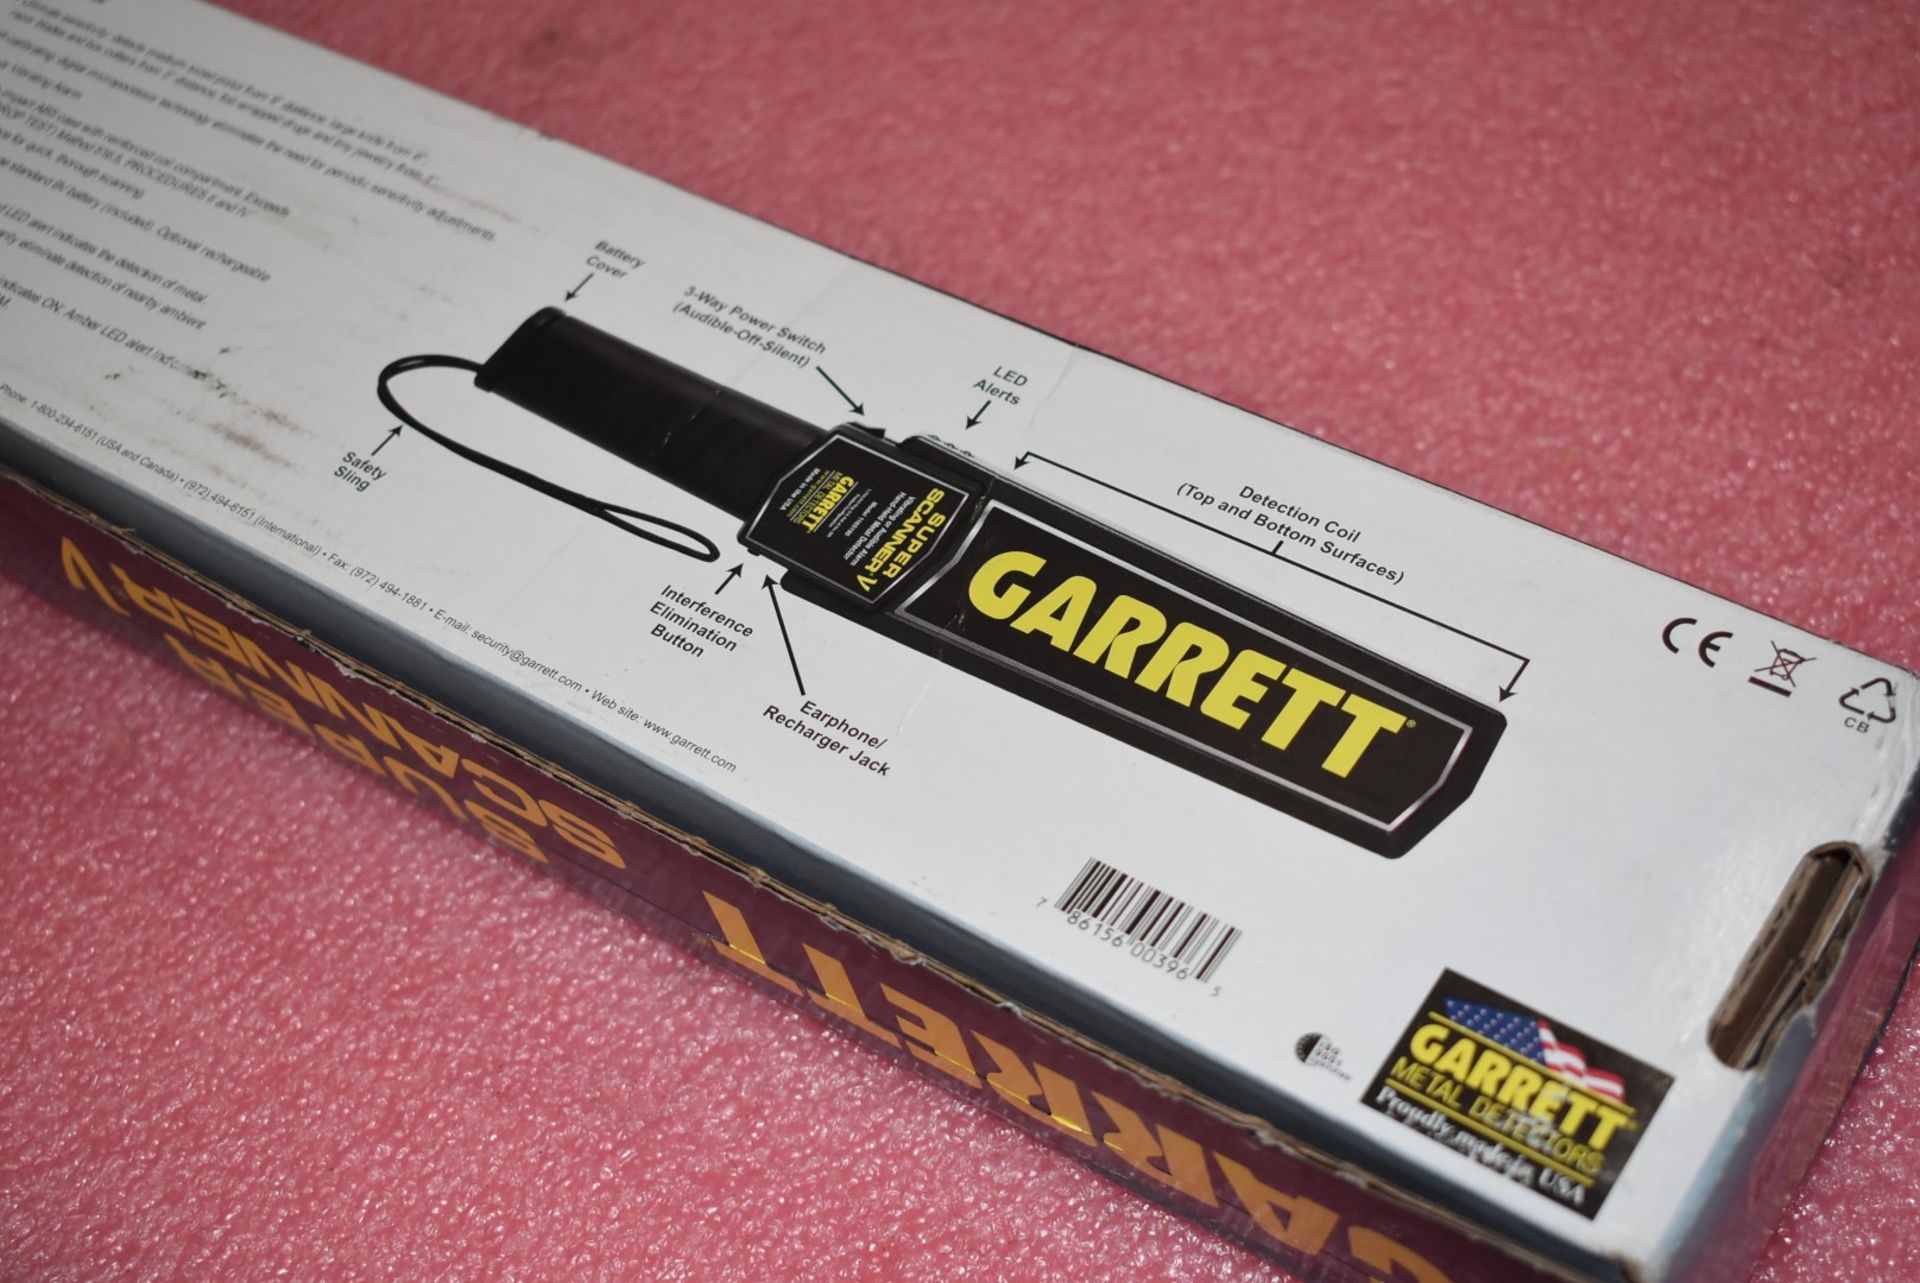 1 x Garrett Super Scanner V Vibrating Audible Hand Held Metal Detector - Unused With Original - Image 7 of 9